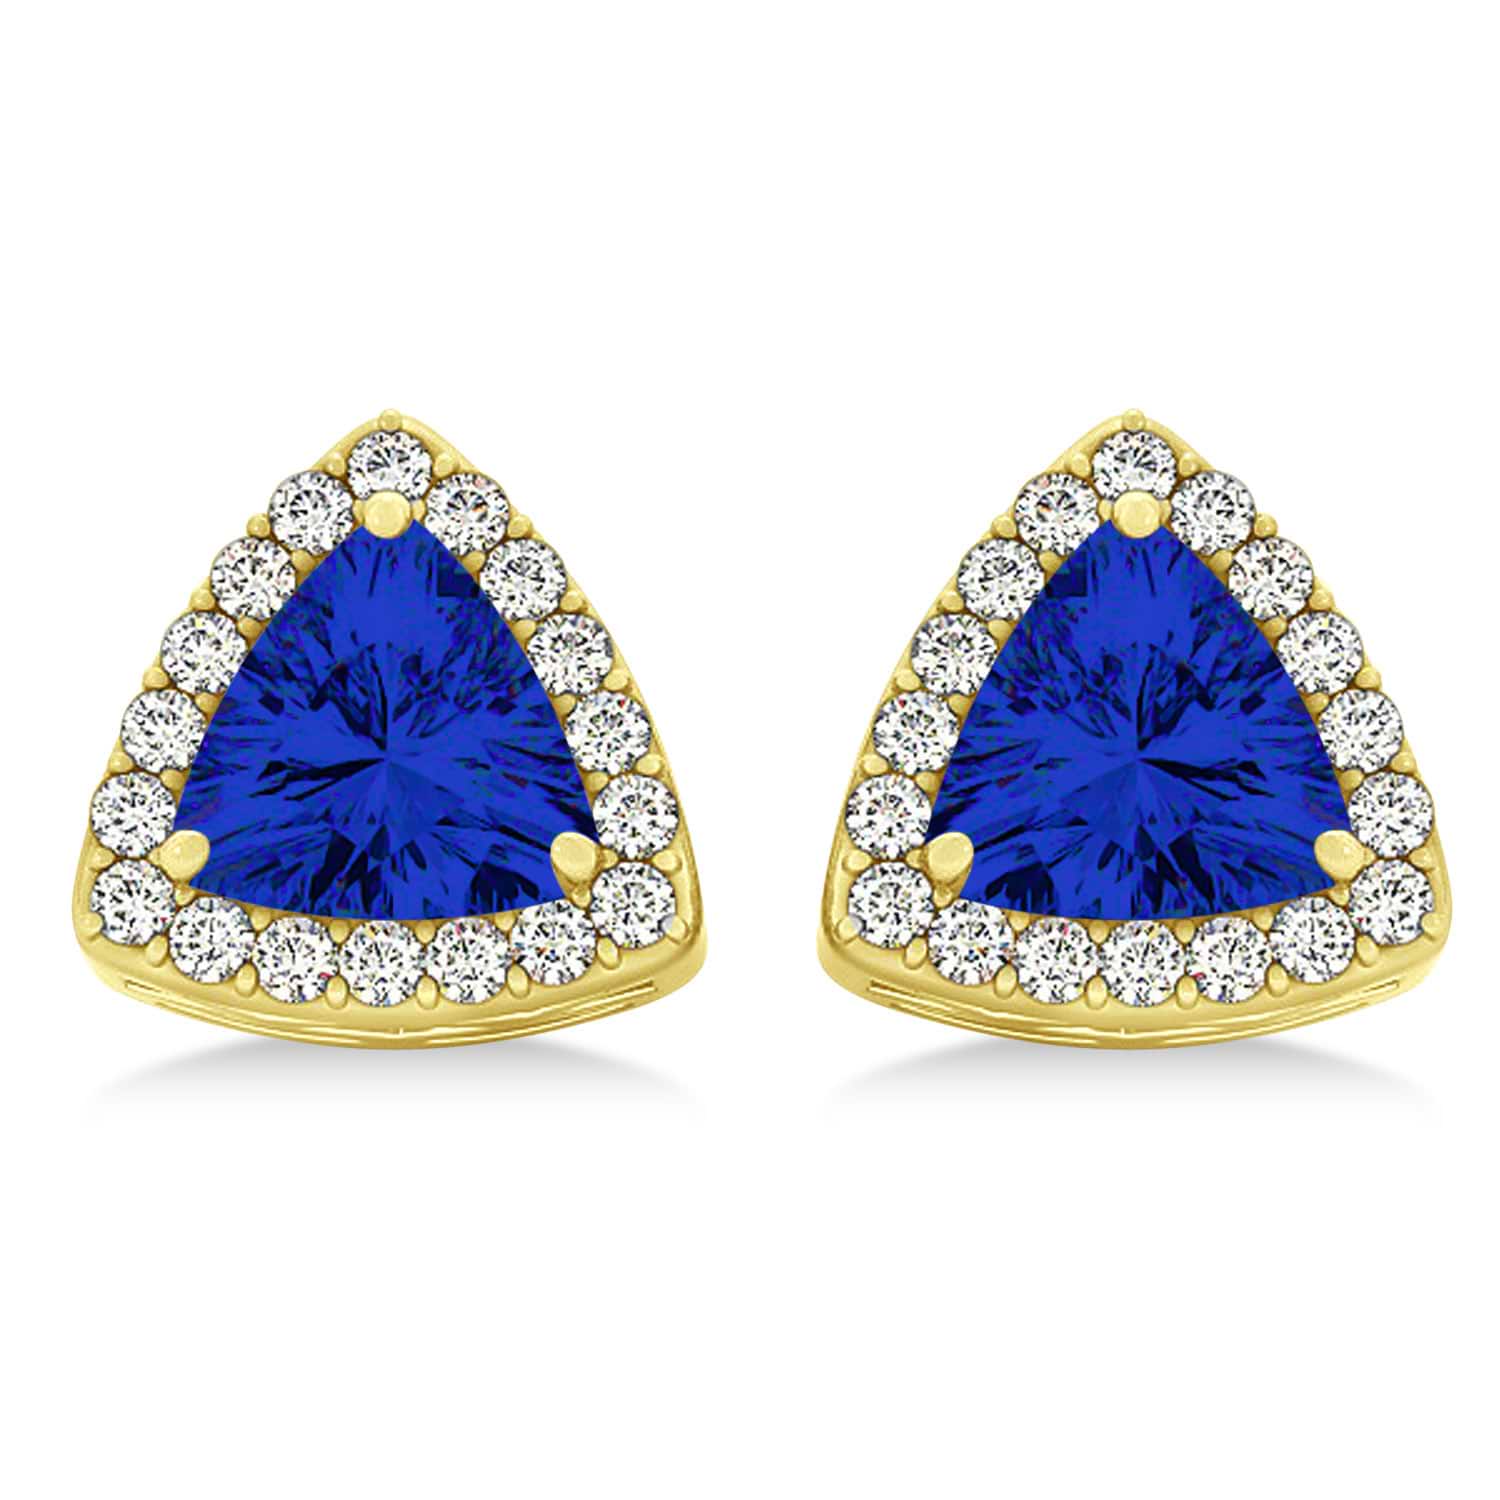 Trilliant Cut Blue Sapphire & Diamond Halo Earrings 14k Yellow Gold (0.93ct)